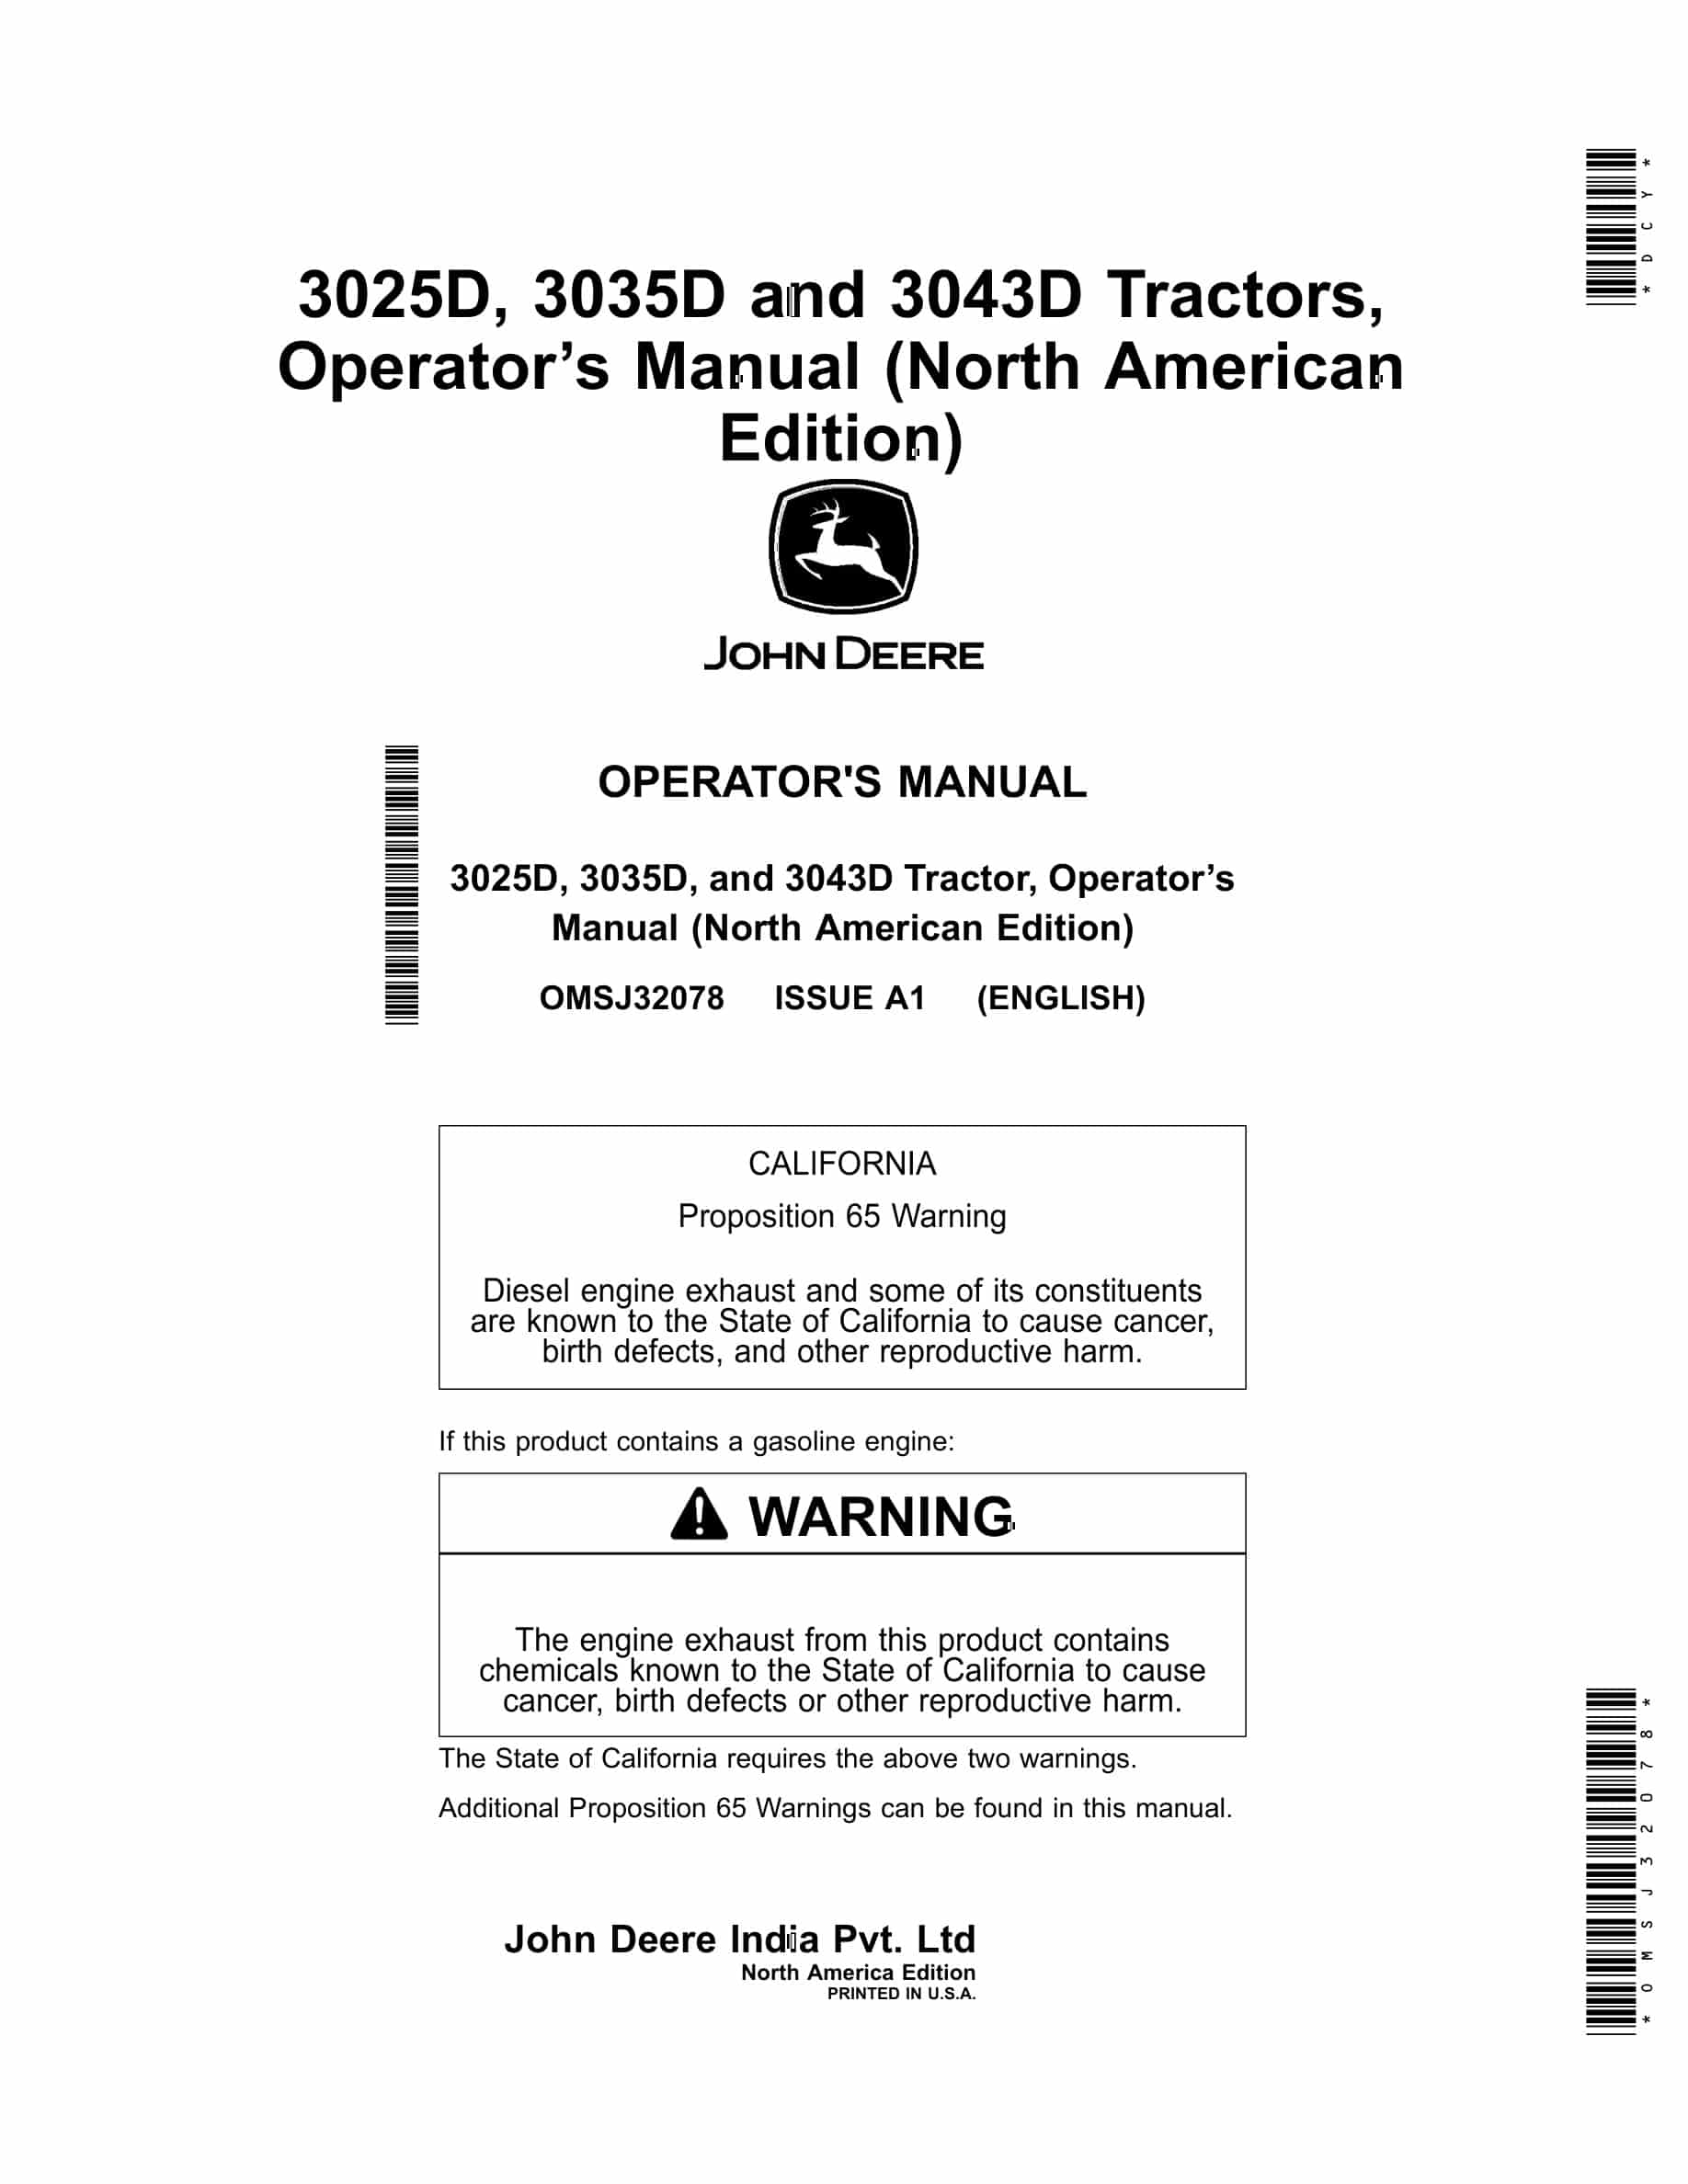 John Deere 3025D, 3035D, and 3043D Tractor Operator Manual OMSJ32078-1